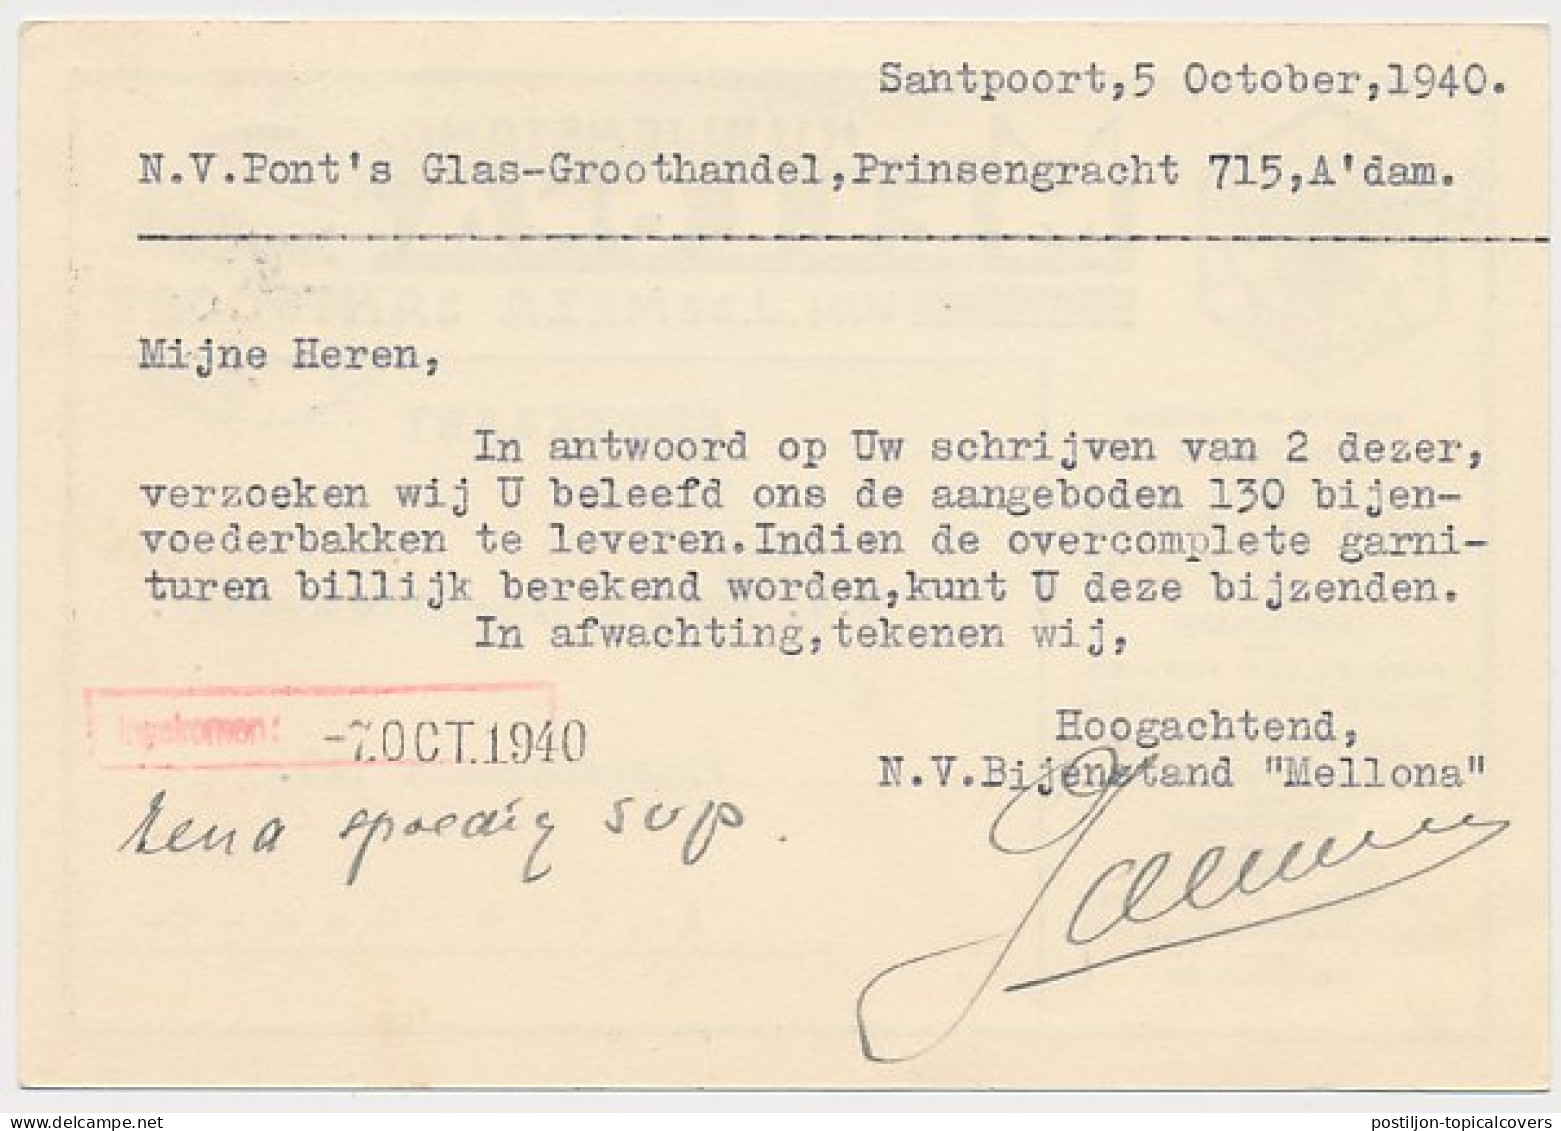 Firma Briefkaart Santpoort 1940 - Mellona - Honing - Bijen - Ohne Zuordnung